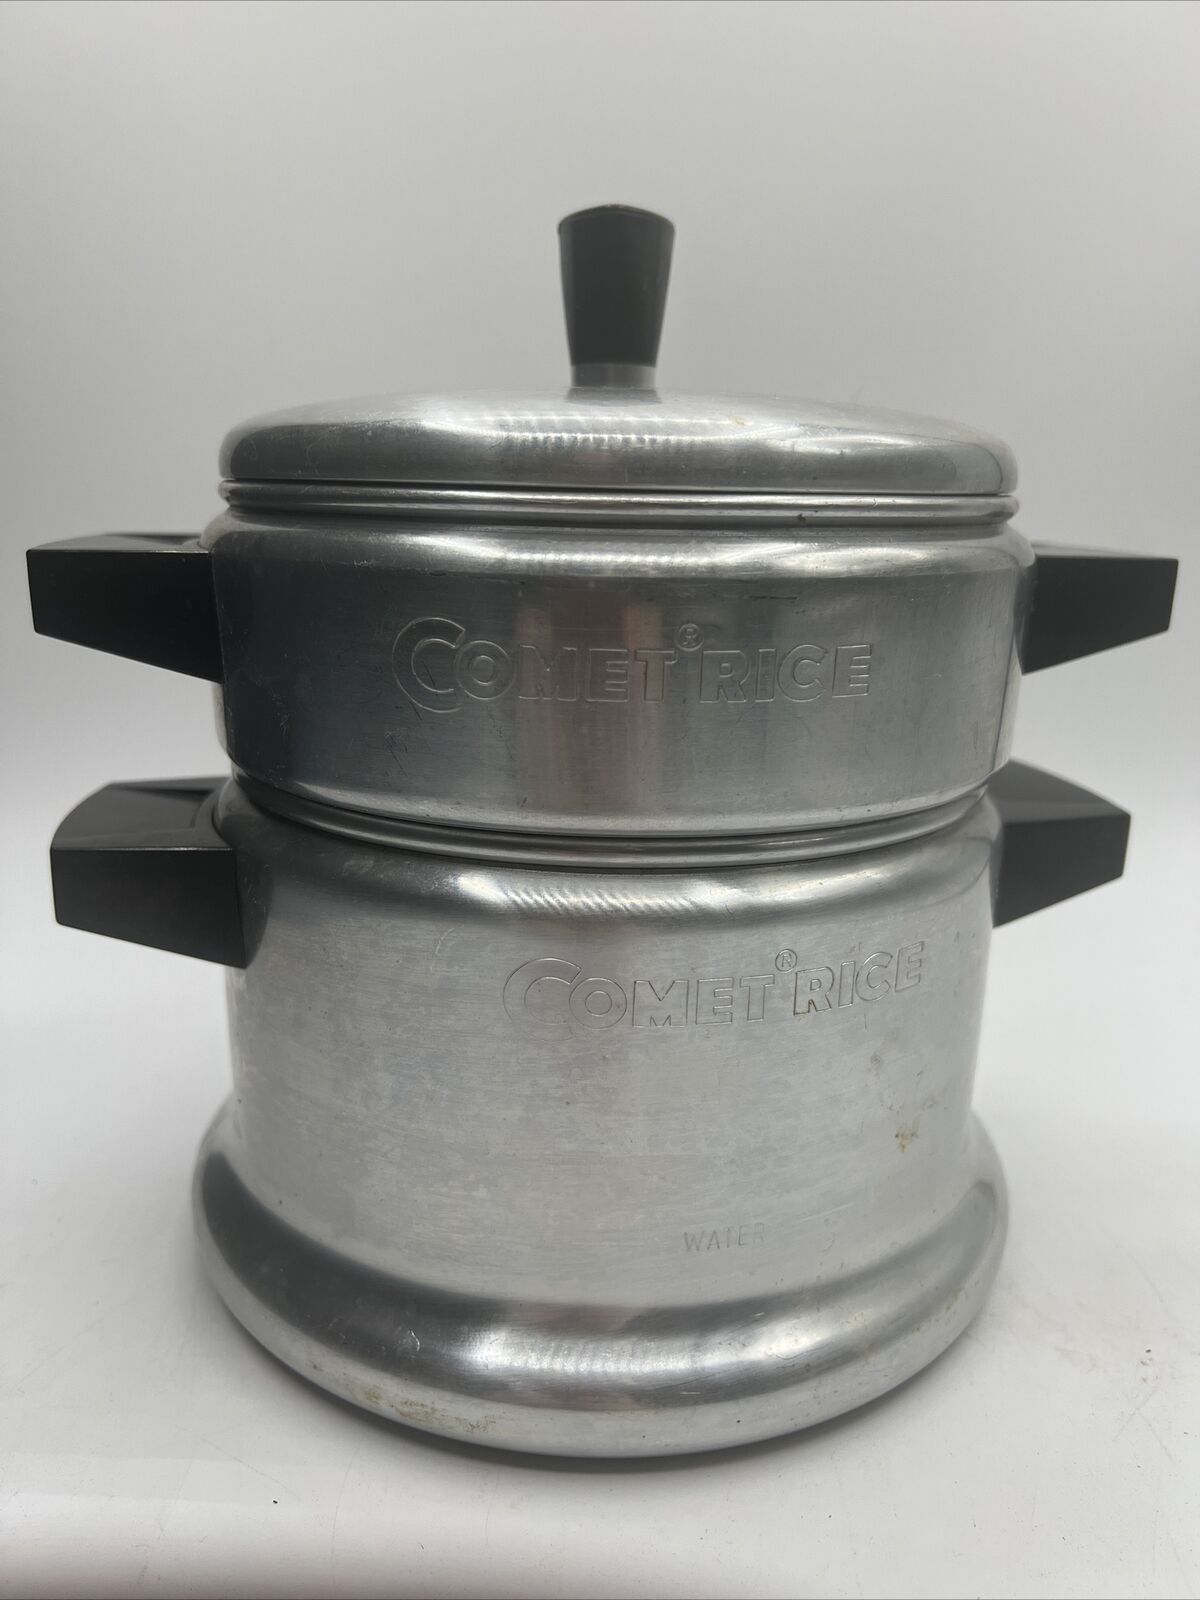 Vintage Mid Century West Bend Comet Rice Aluminum Steamer Cooker 3 Piece Pot